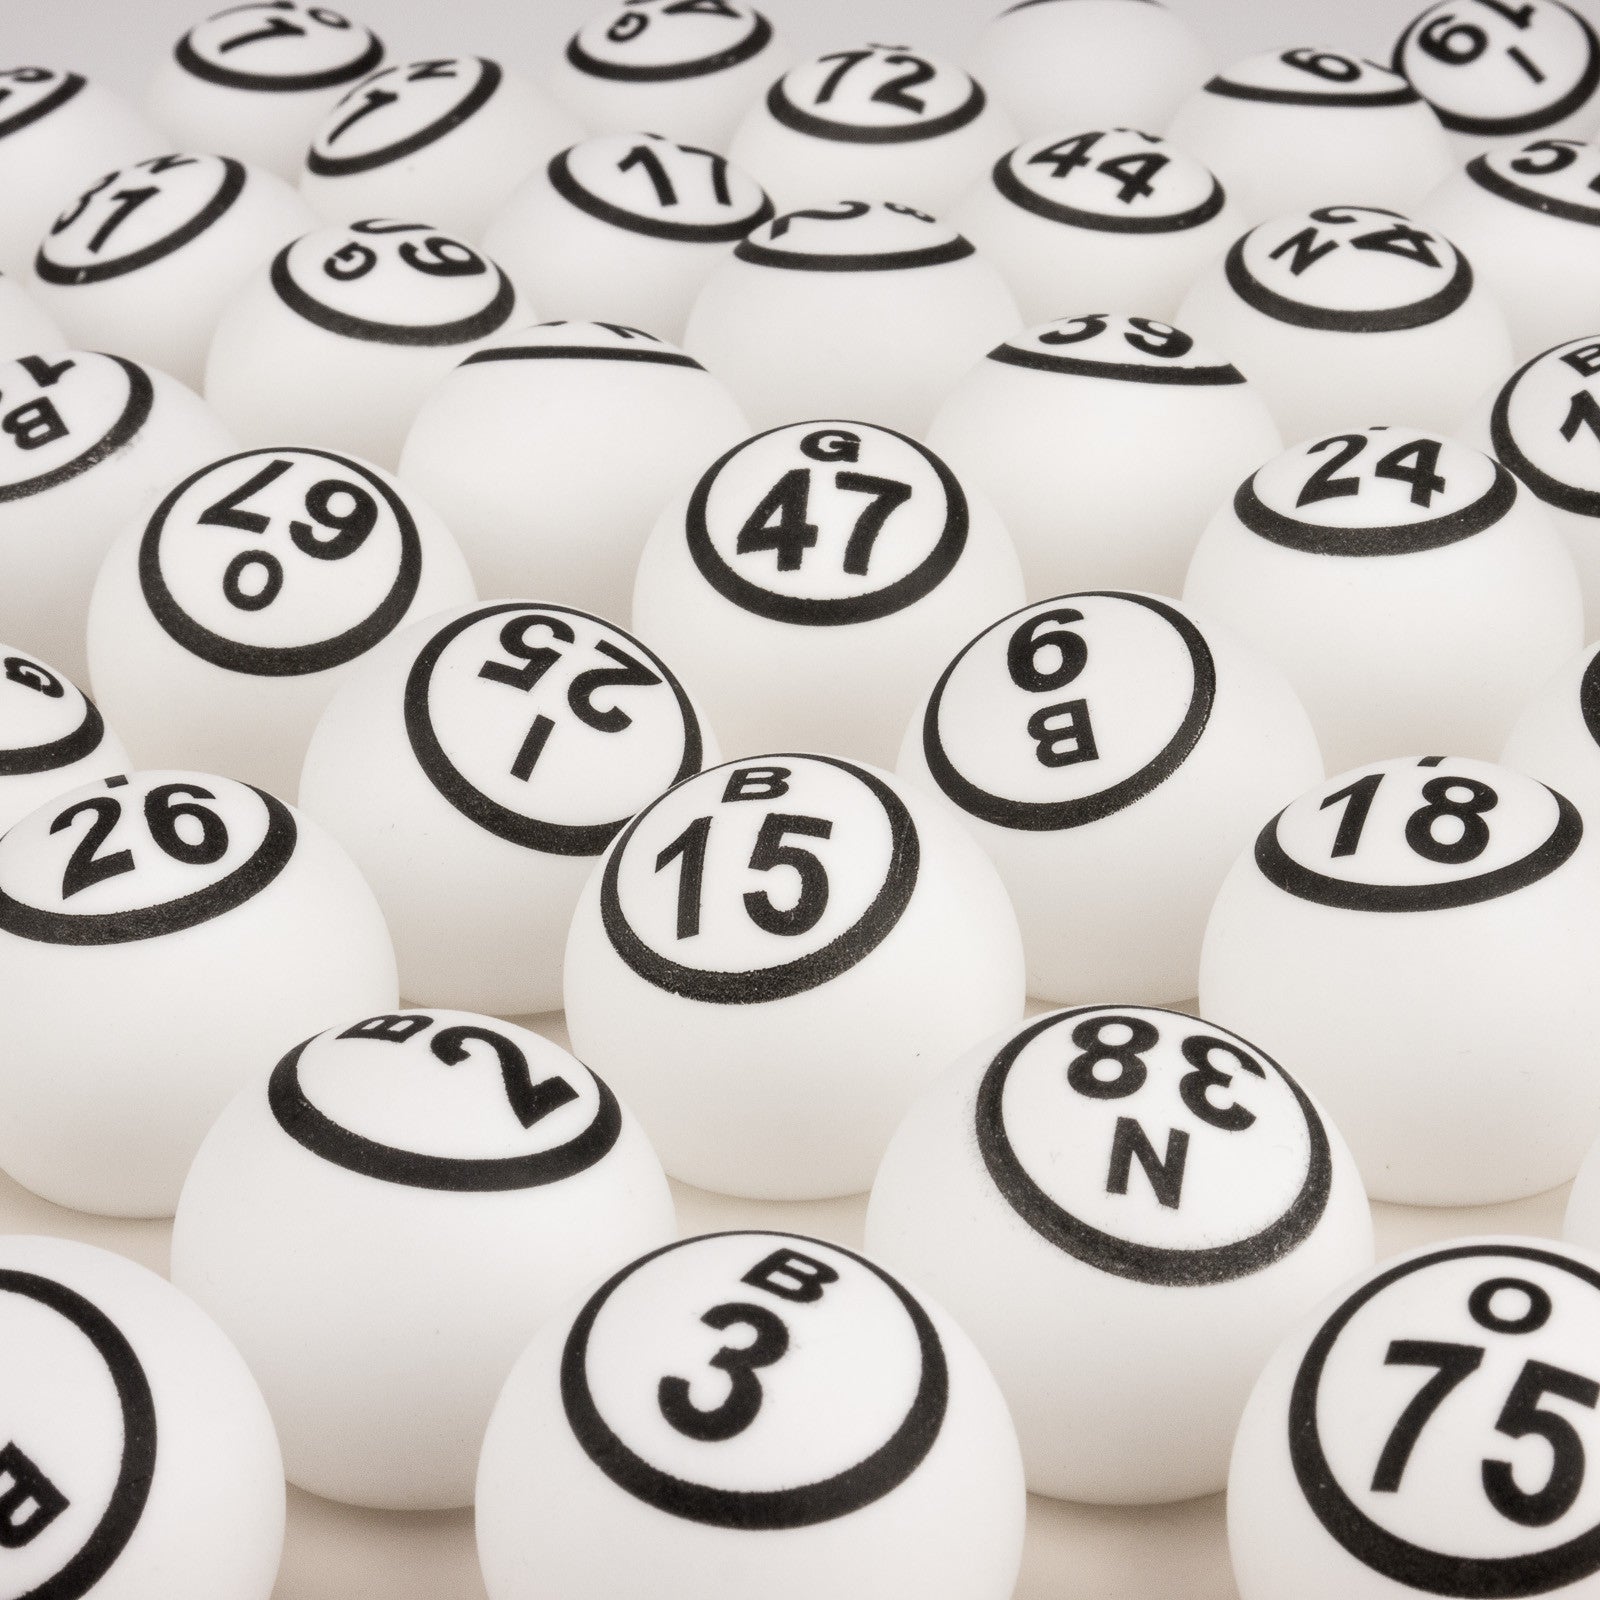 Bingo Balls - White 1 Sided - 1.5 inch - Casino Supply